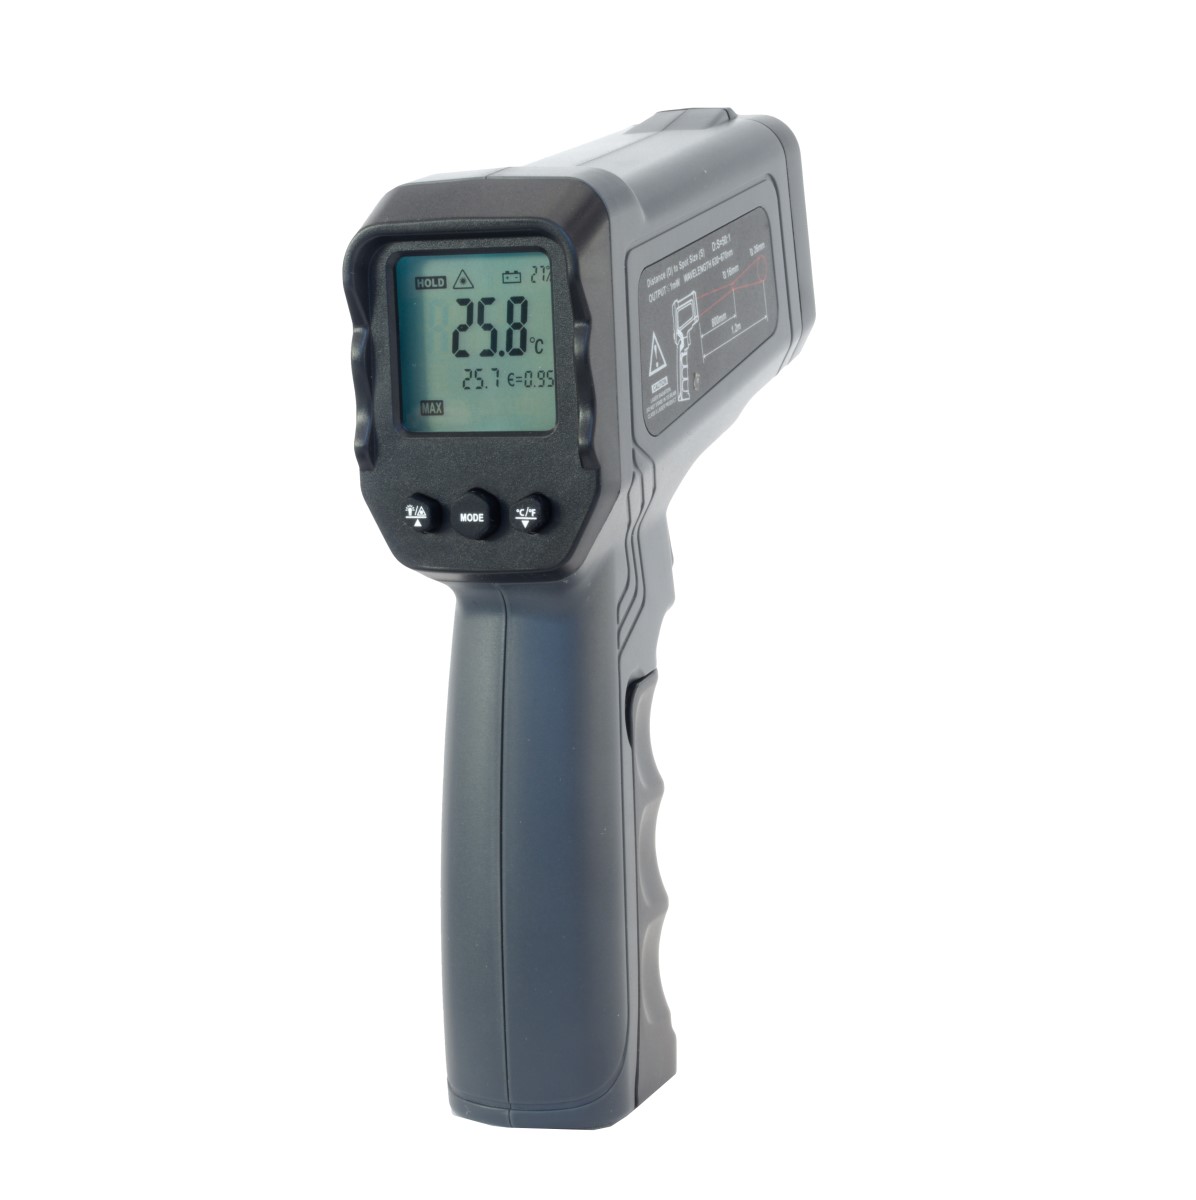 Thermomètre infrarouge Acheter, Mesure jusqu'à 1600 °C